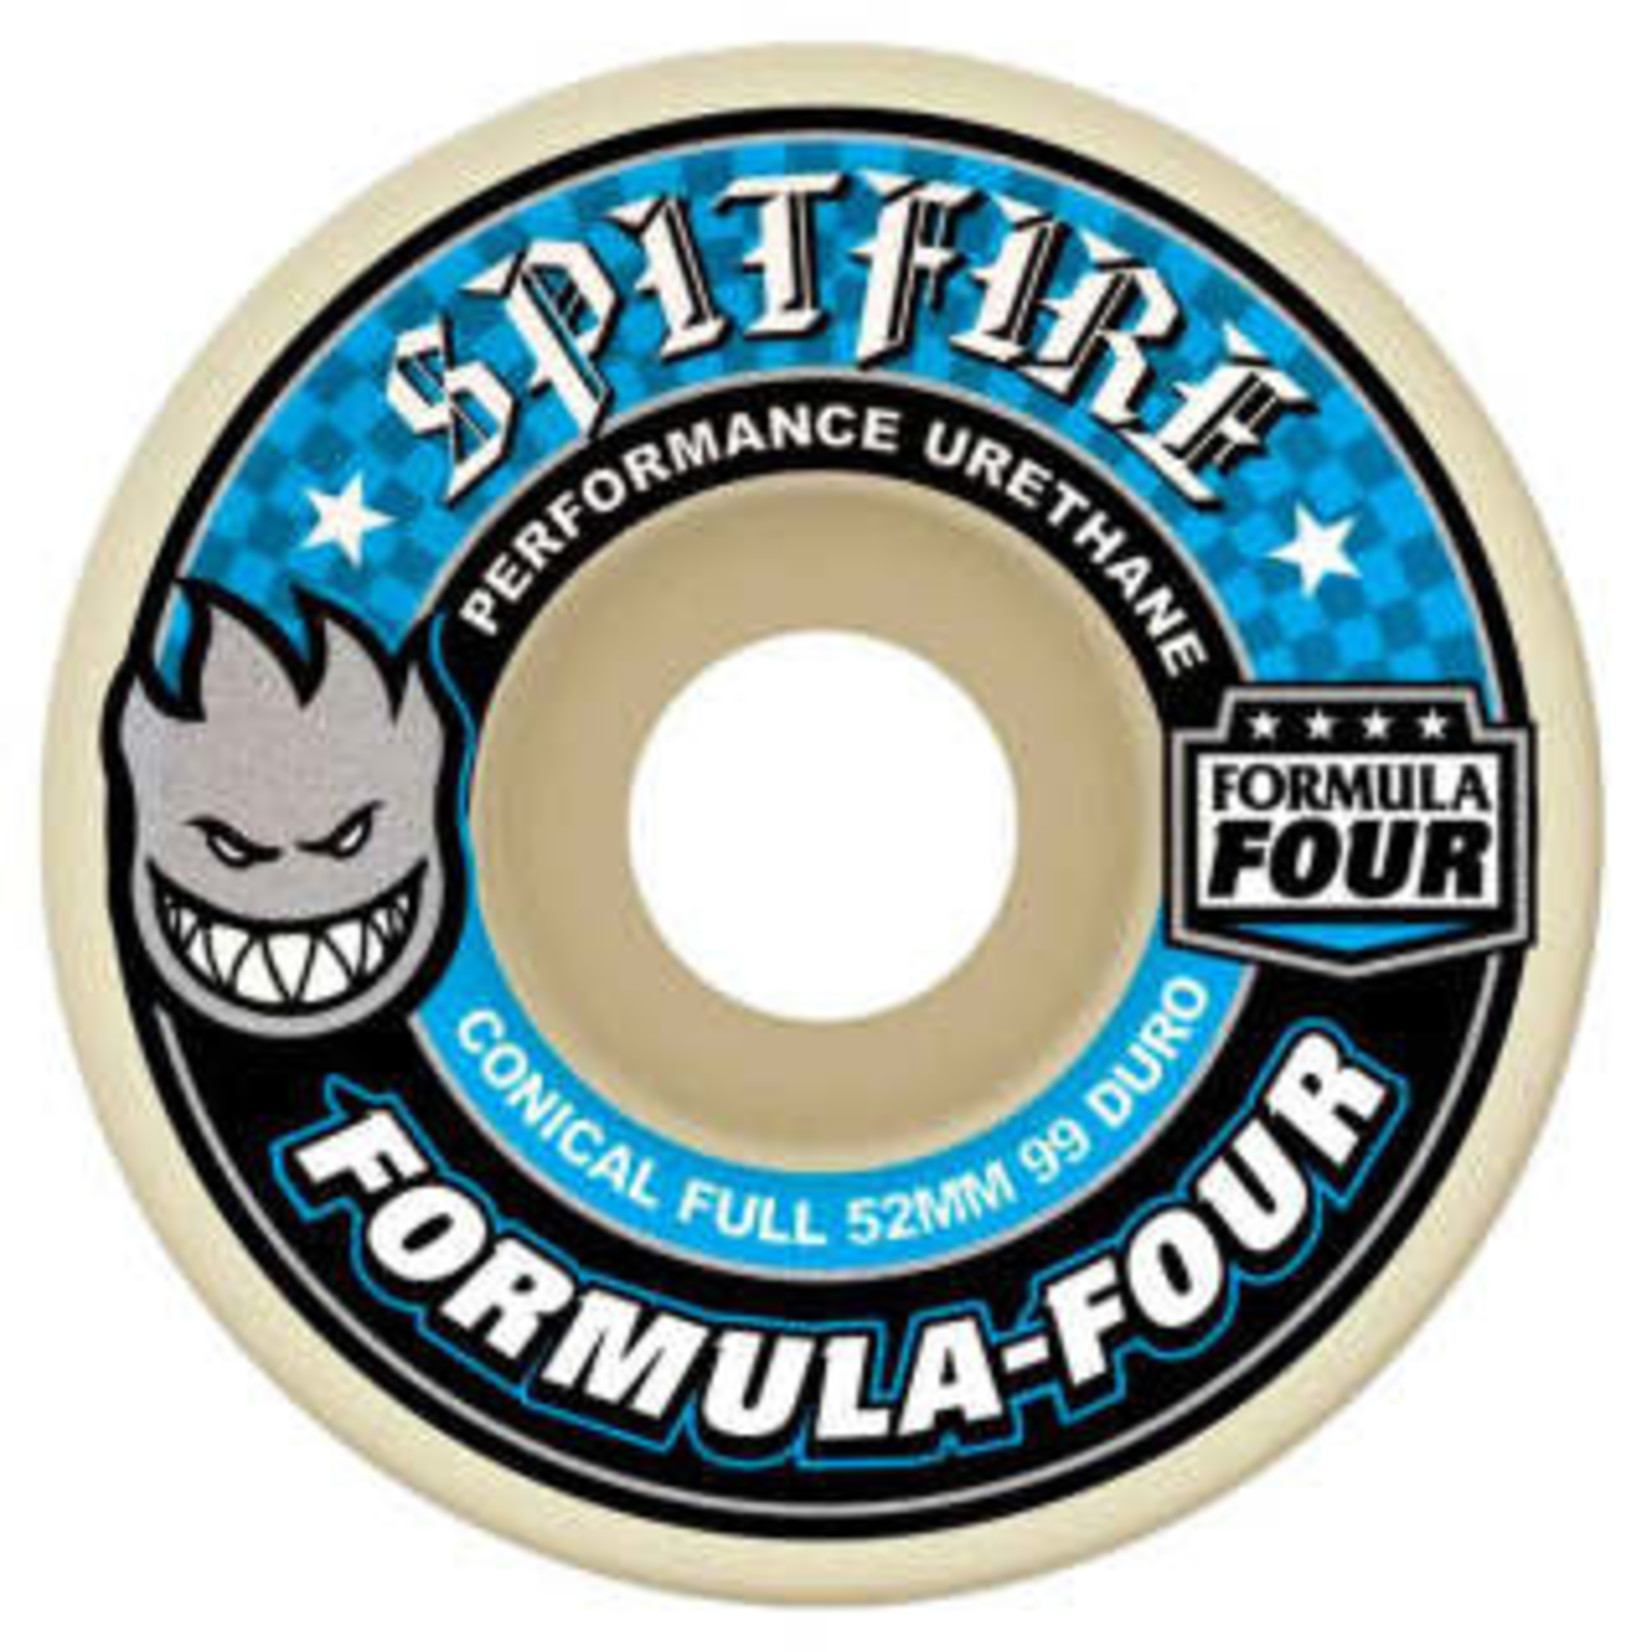 Spitfire Wheels Spitfire Formula Four 99 Conical Full Wheels 52mm